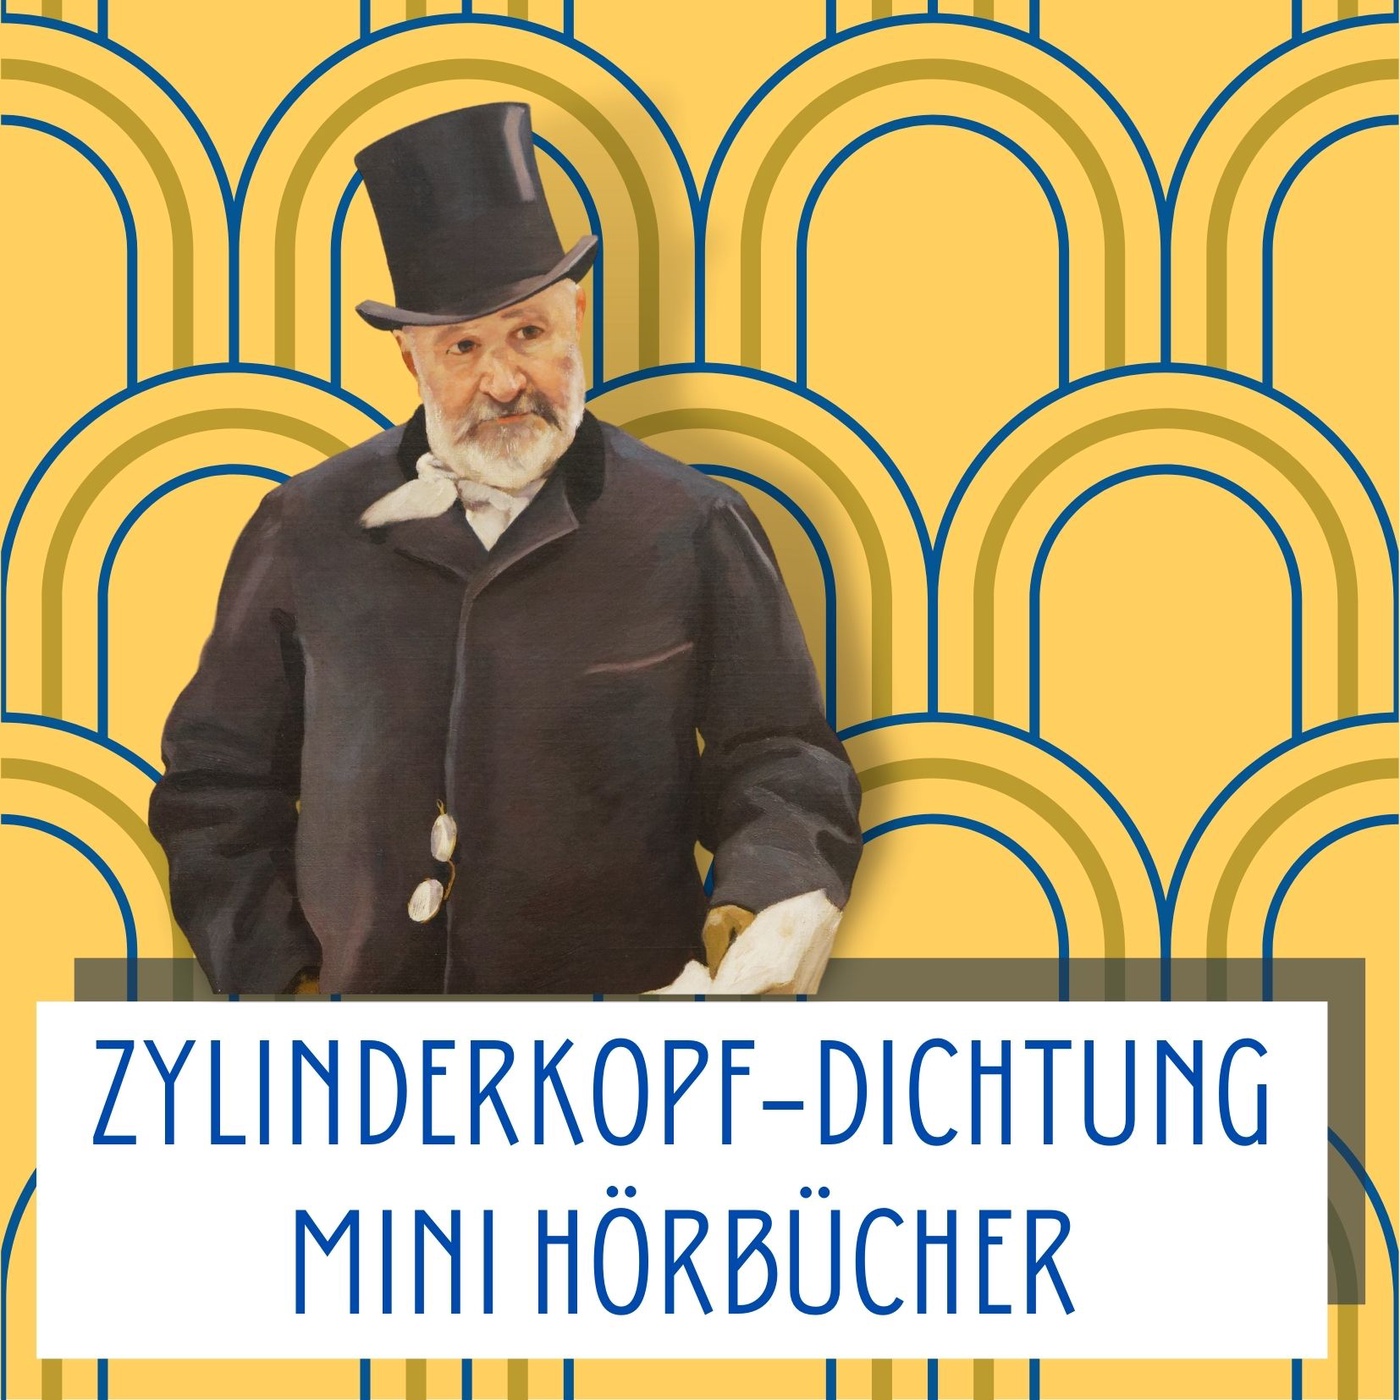 Zylinderkopf-Dichtung: Mini Hörbücher